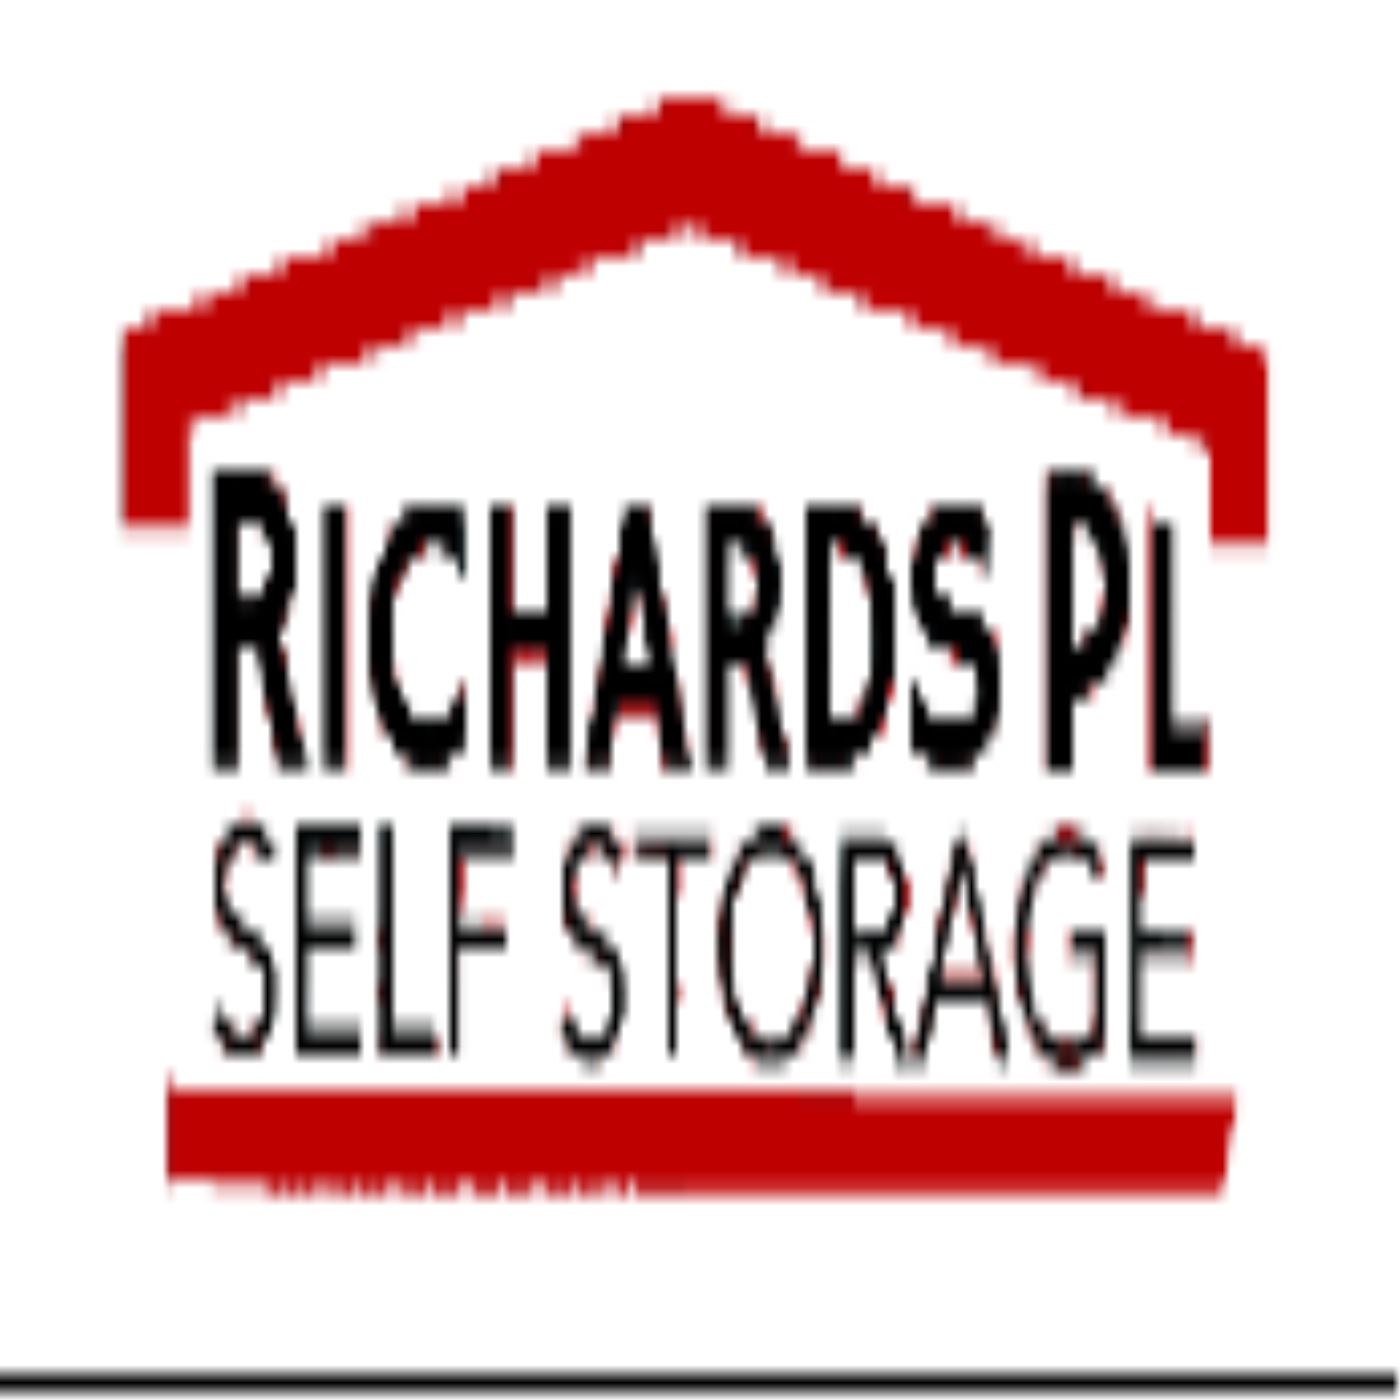 Richards Place Self Storage